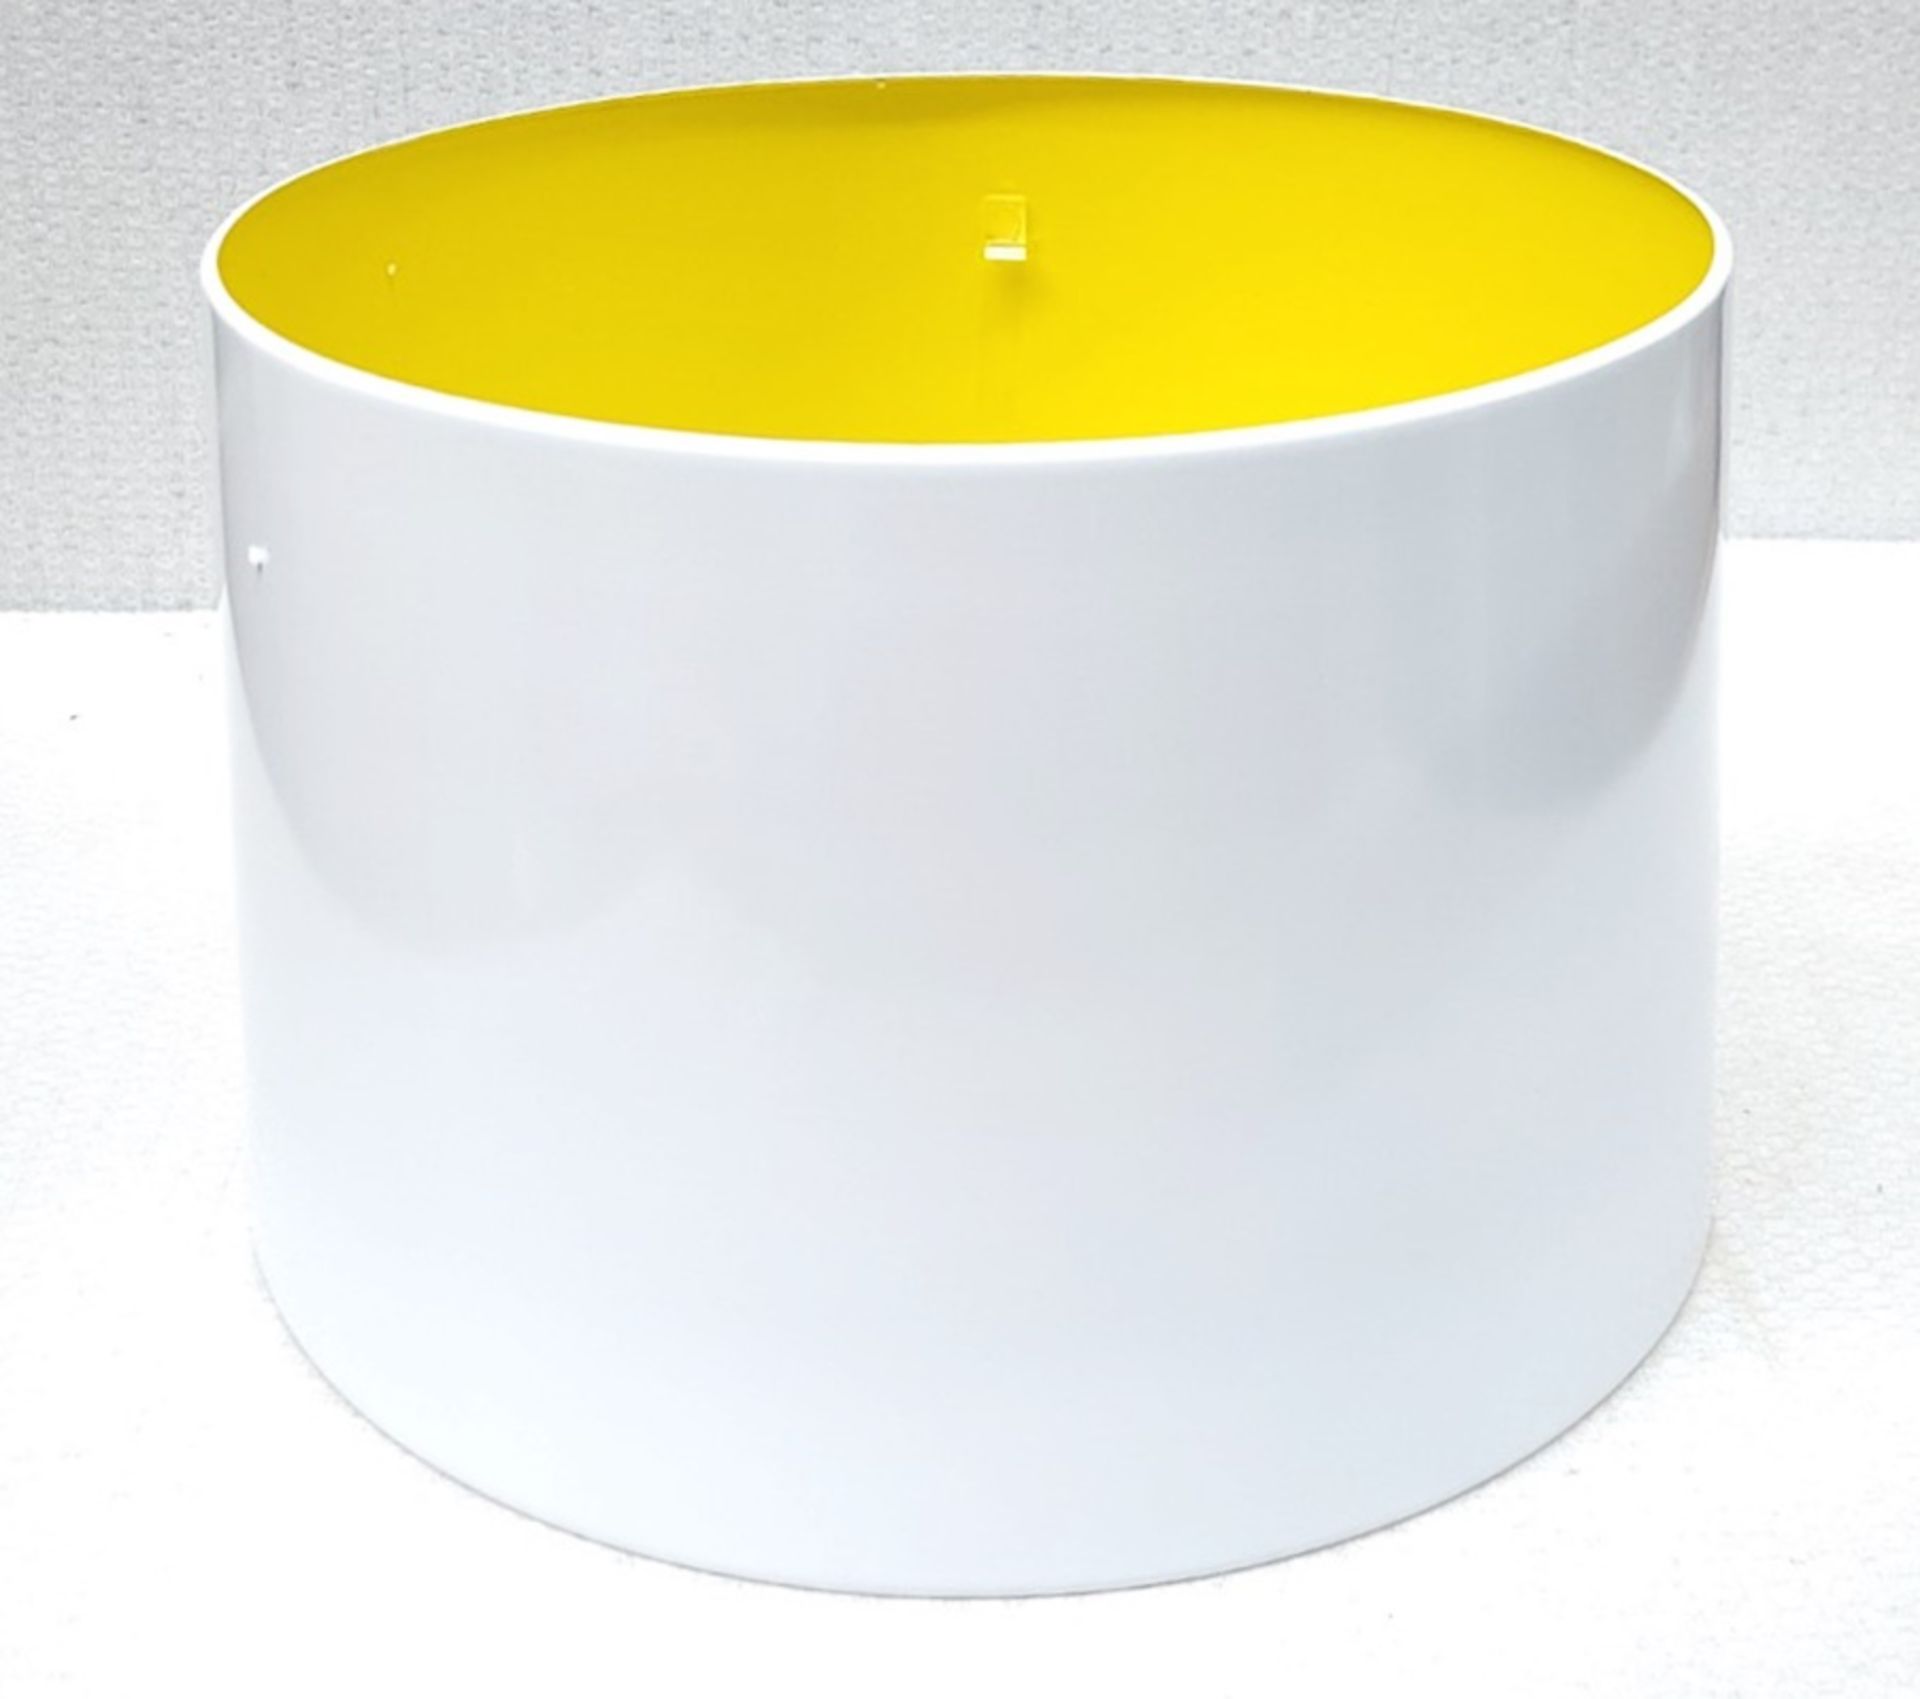 1 x BLUESUNTREE Scandi Metal White Pendant Drum Lamp Shape With Bright Yellow Interior 50cm - Image 5 of 5